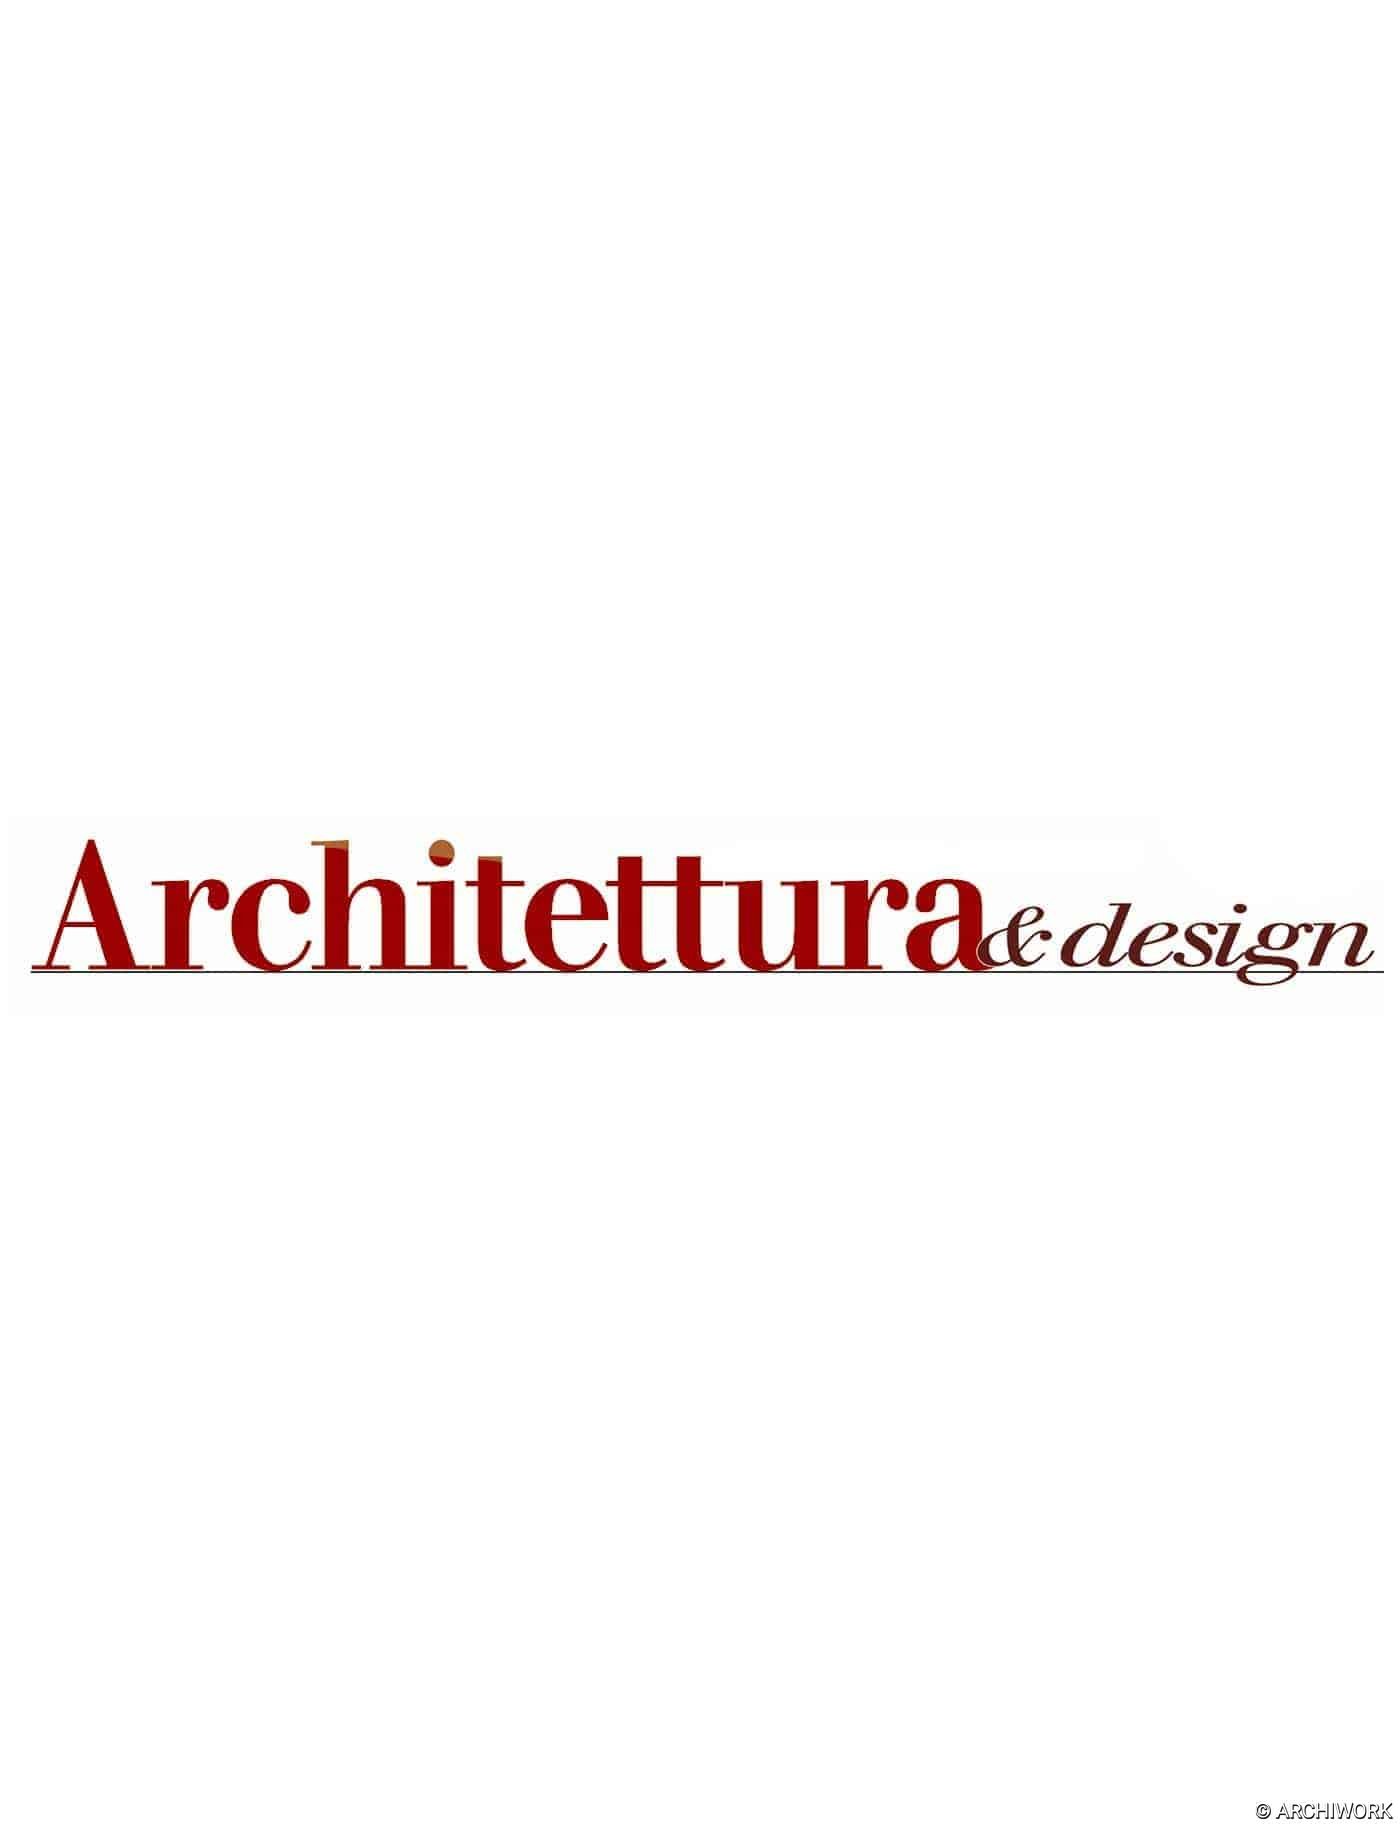 architettura & design